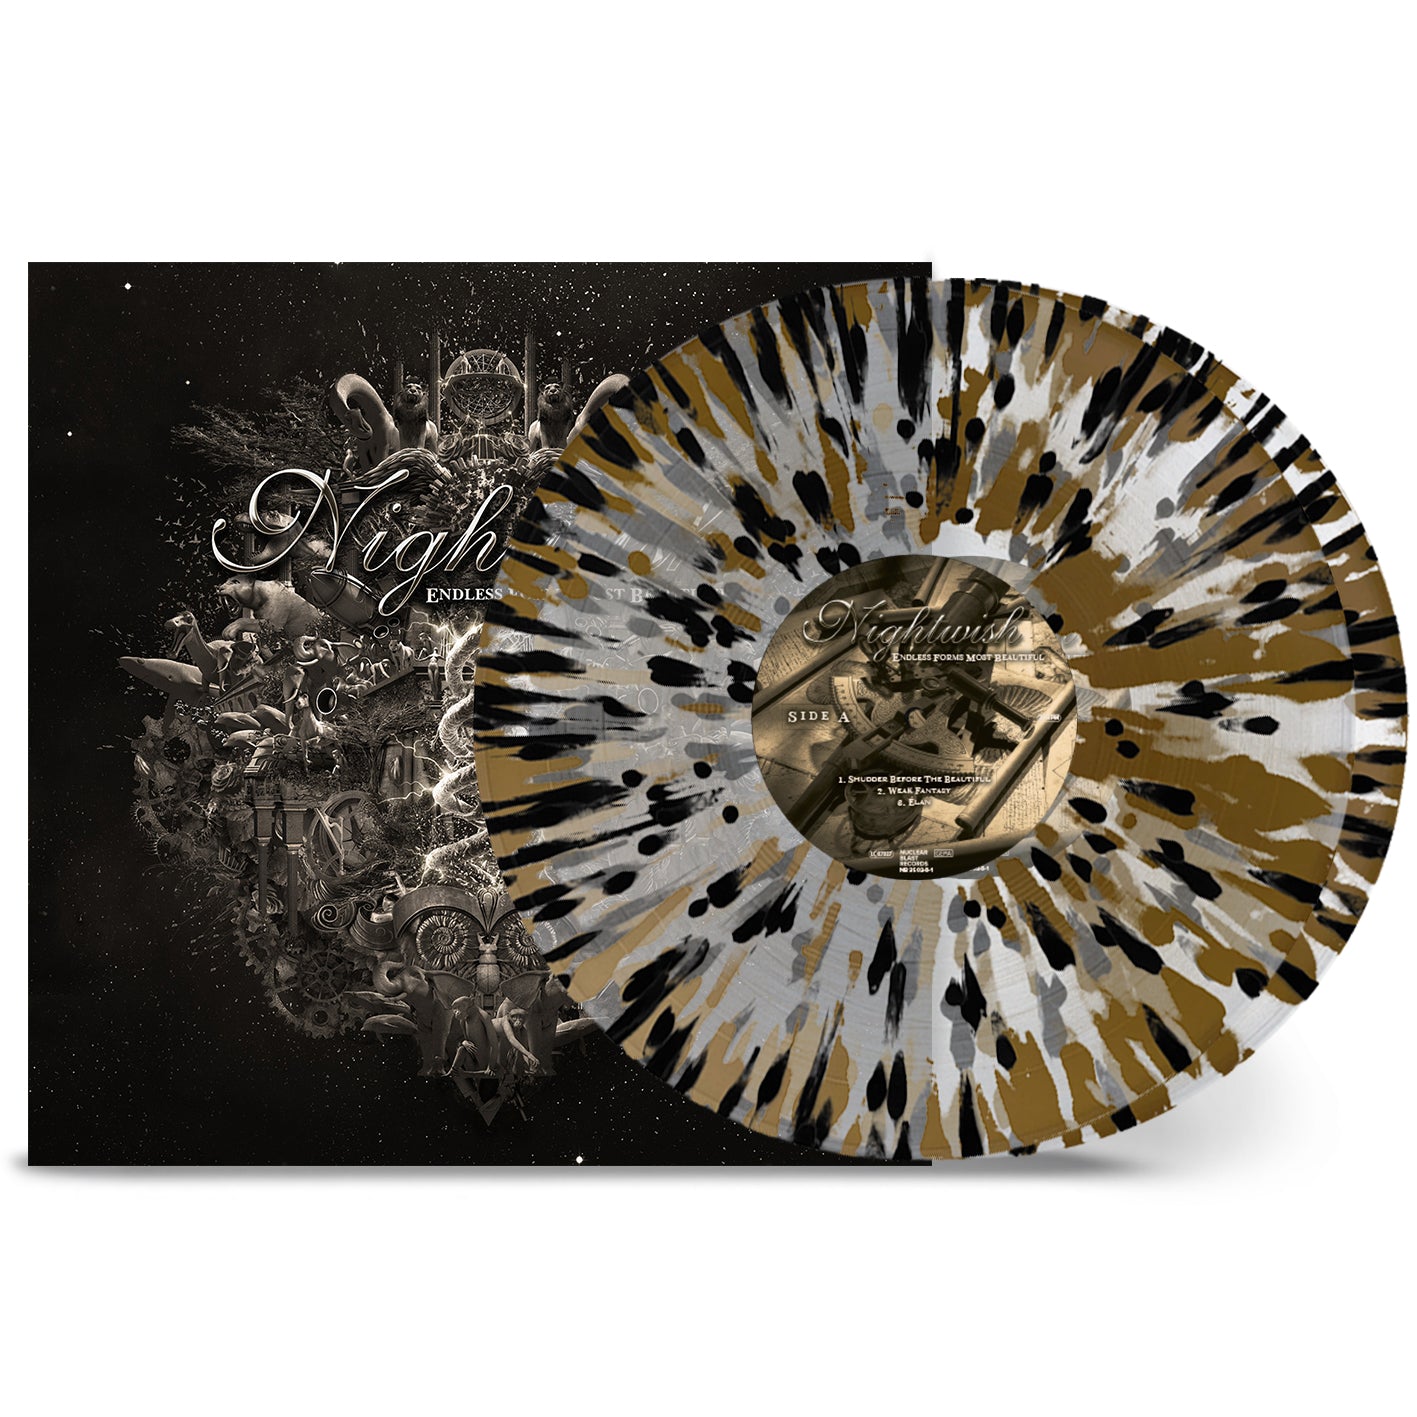 Nightwish "Endless Forms Most Beautiful" 2x12" Clear Gold Black Splatter Vinyl